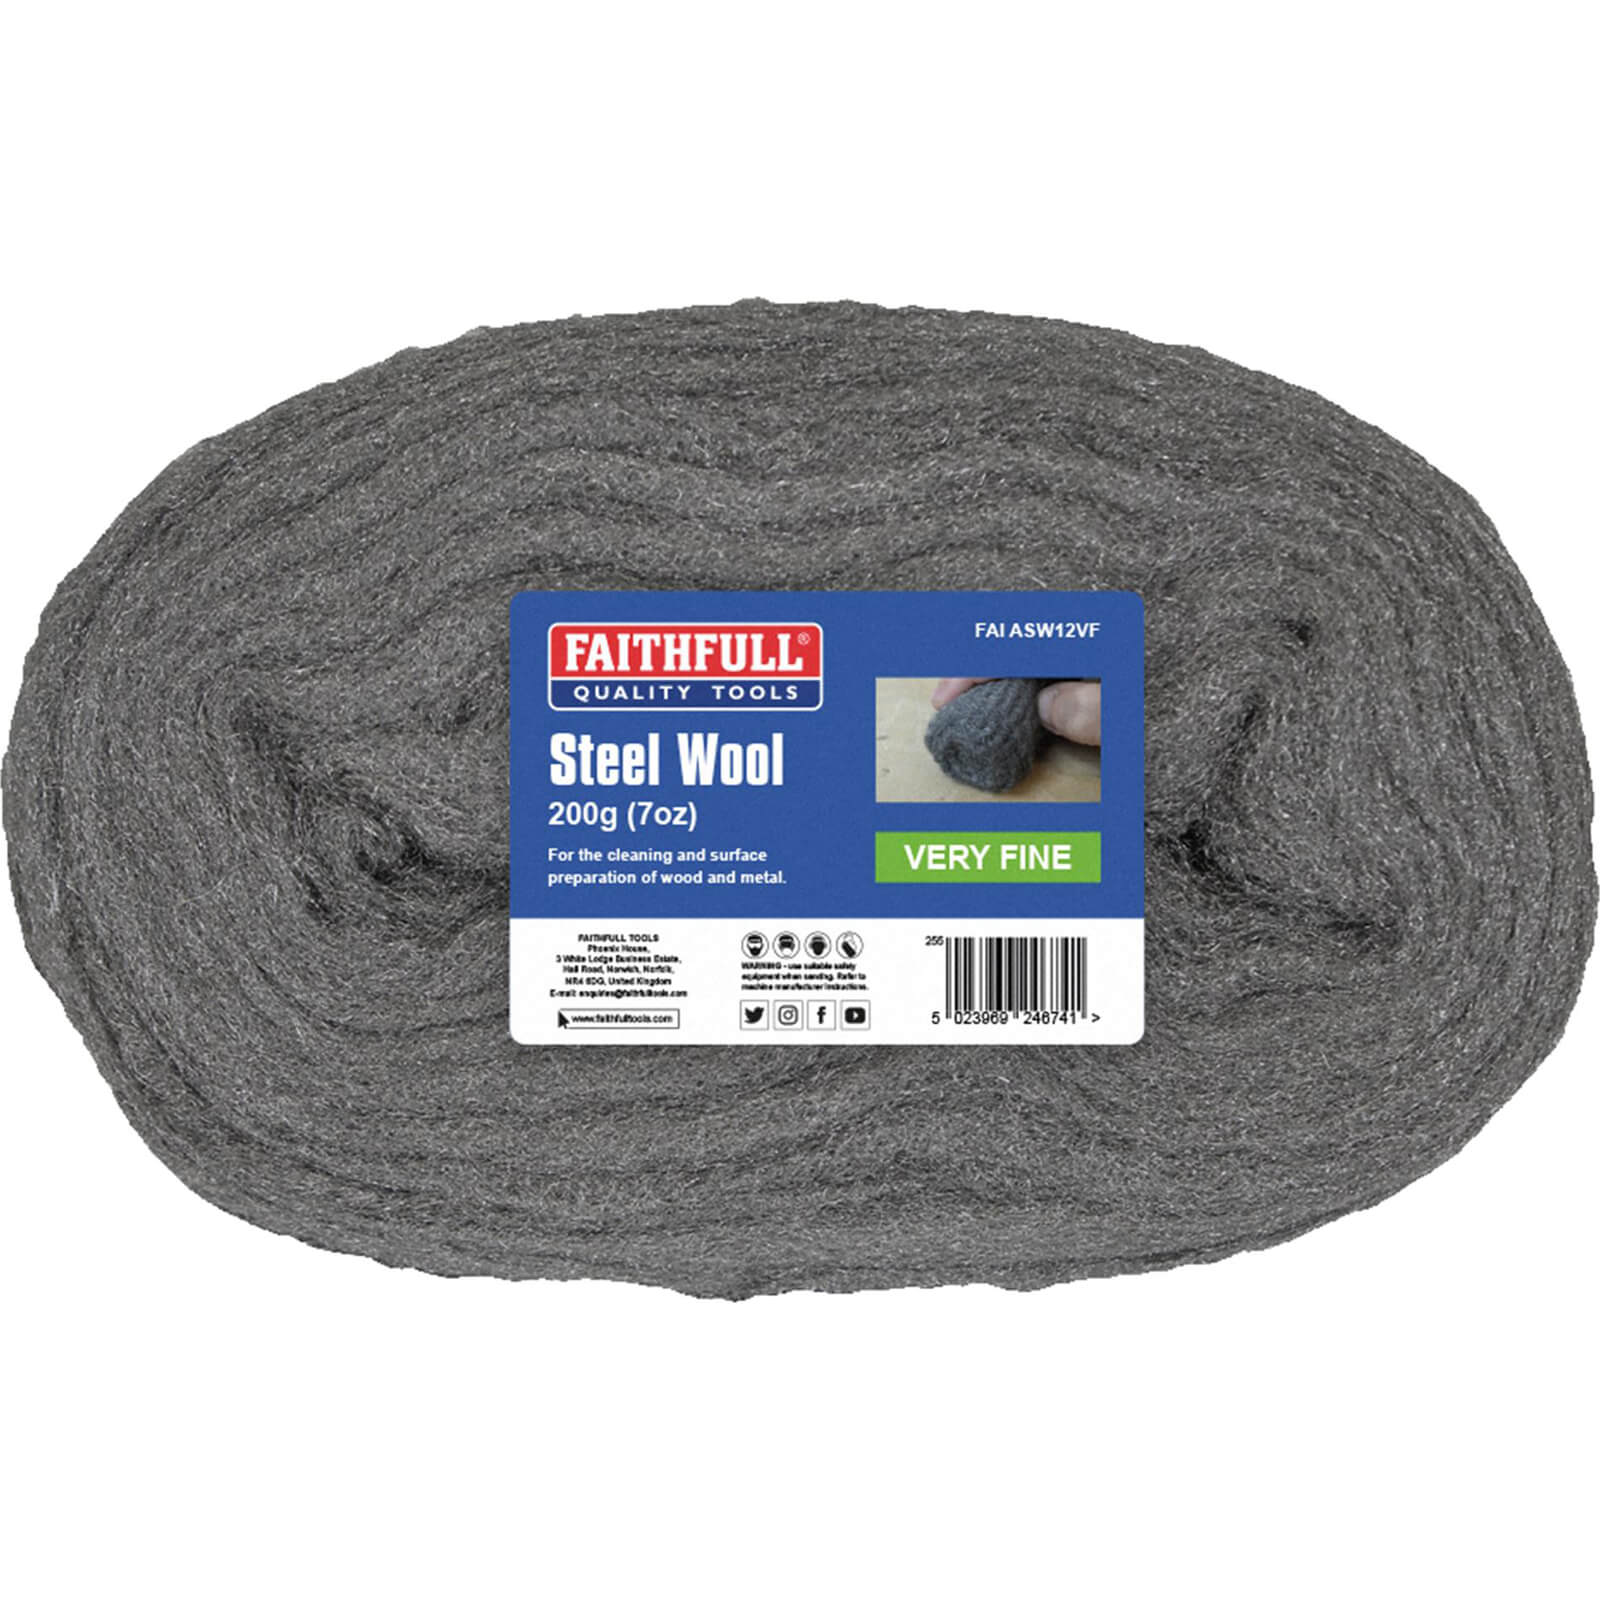 Photo of Faithfull Steel Wire Wool Very Fine 200g